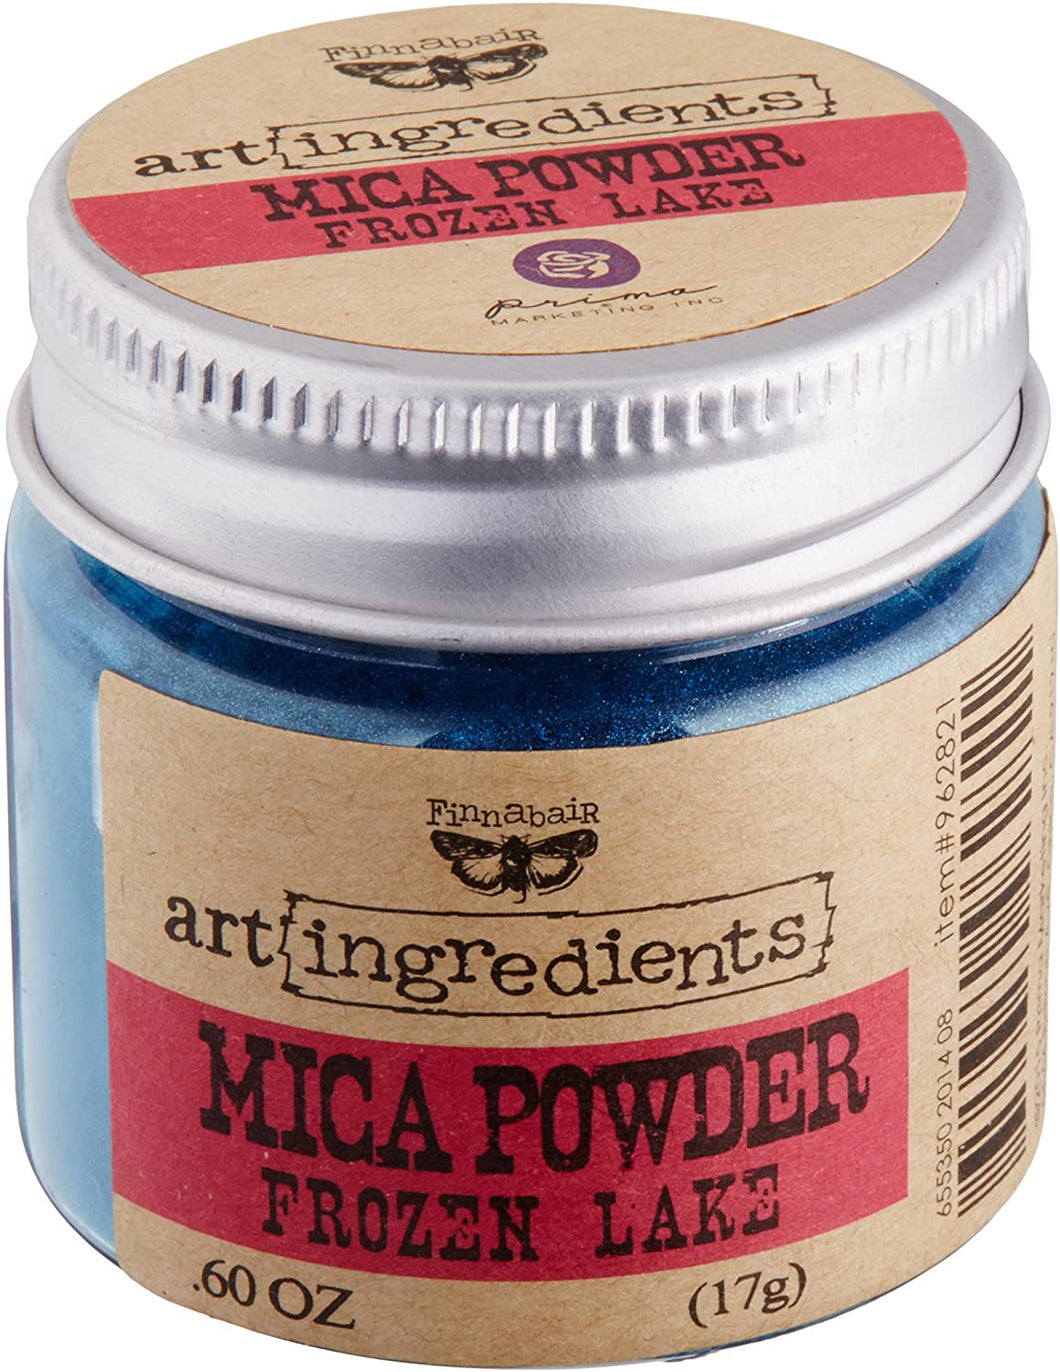 Mica Powder - Frozen Lake FINNABAIR Art Ingredients